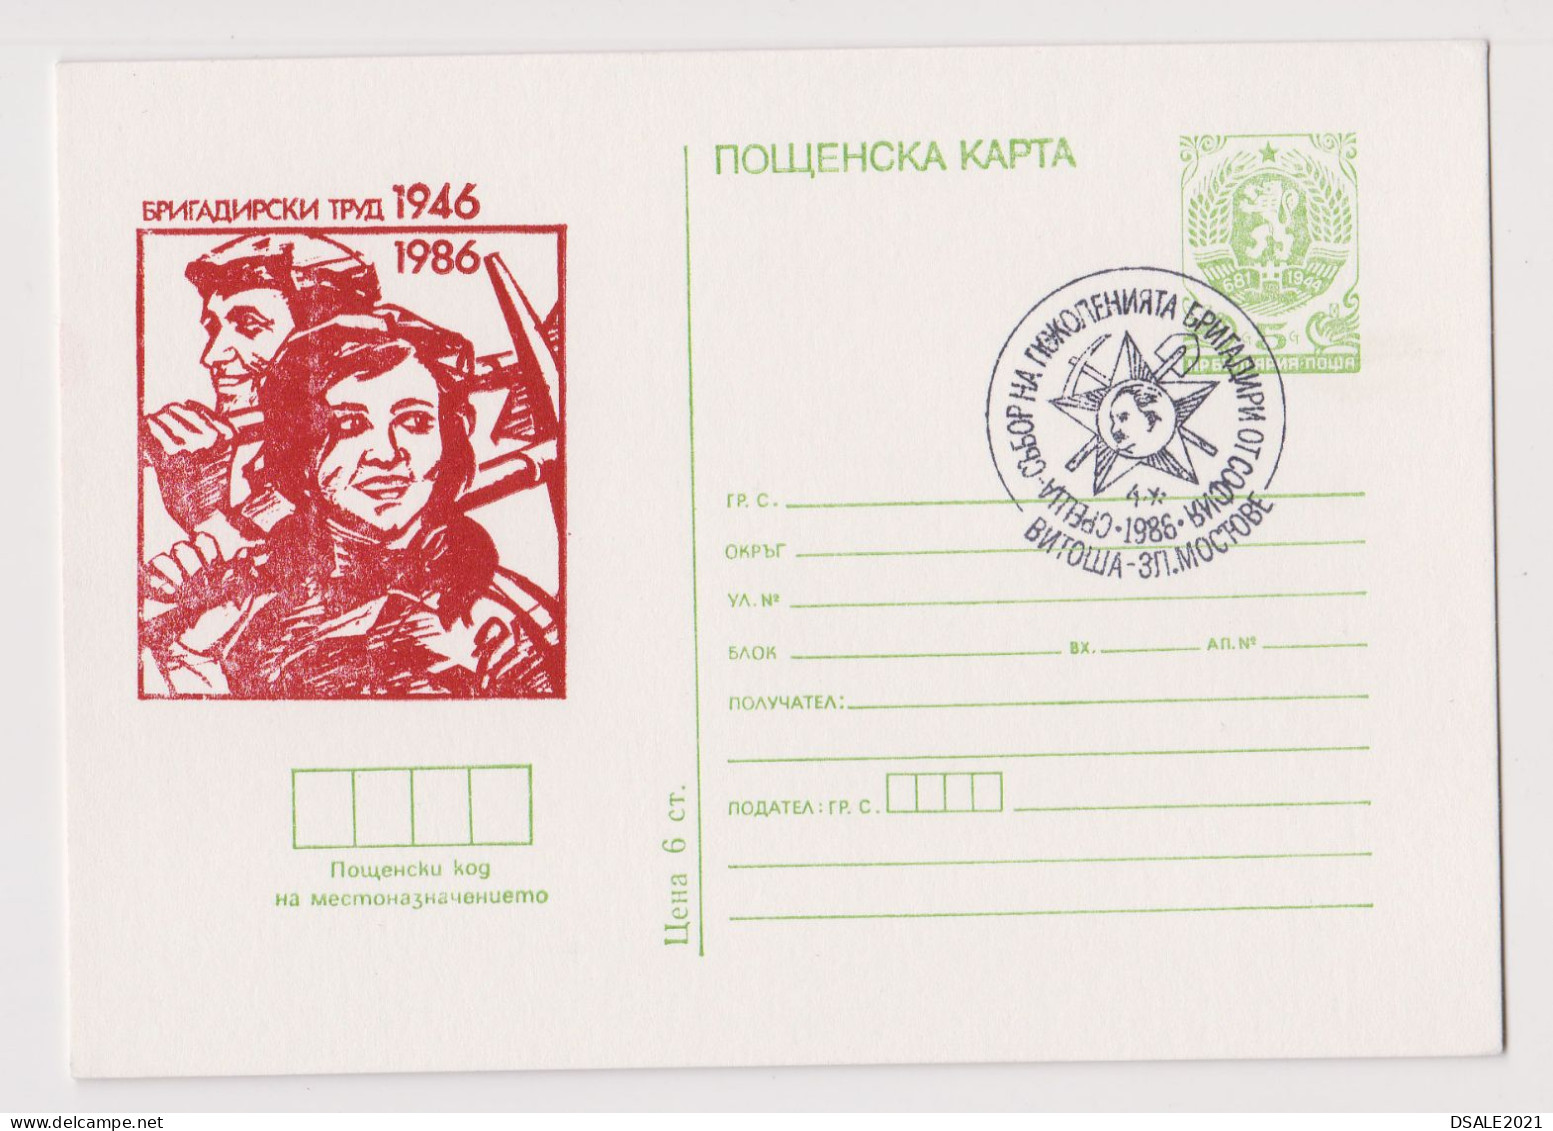 Bulgaria Bulgarie Bulgarien 1986 Postal Stationery Card, Ganzsachen, Entier, 1946 Bulgarian Youth Brigade Movement 67498 - Cartes Postales